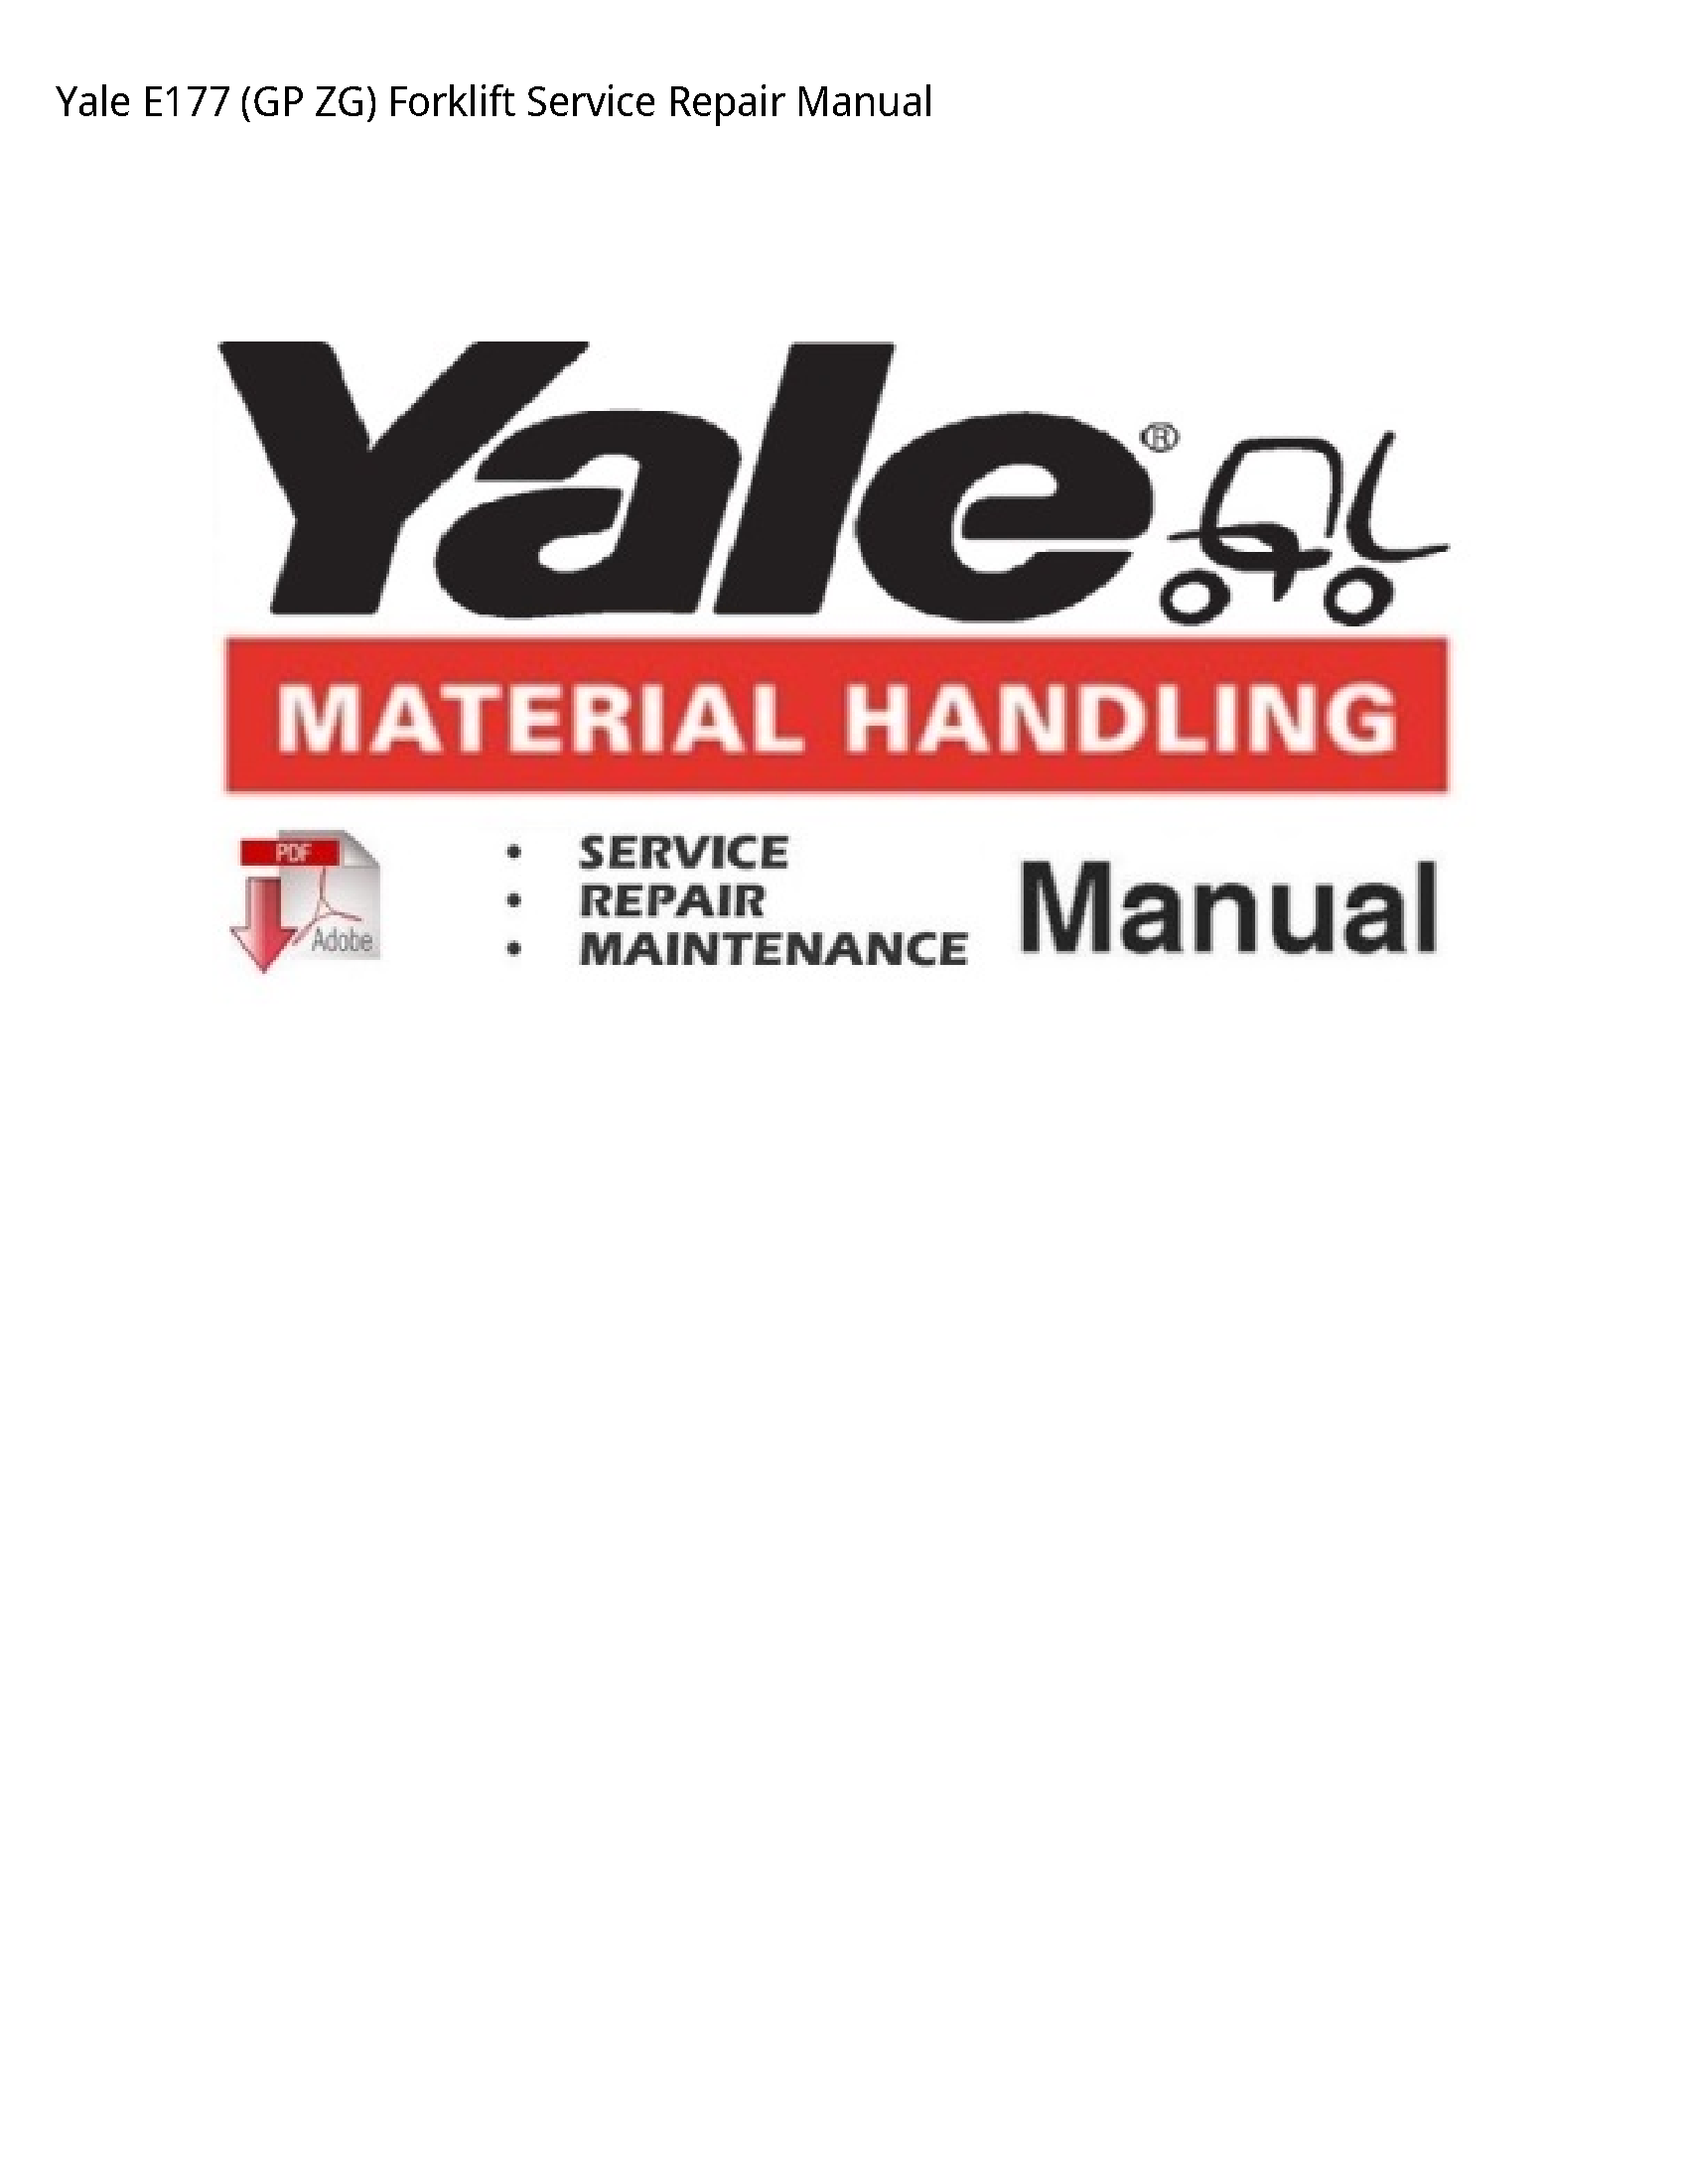 Yale E177 (GP ZG) Forklift manual